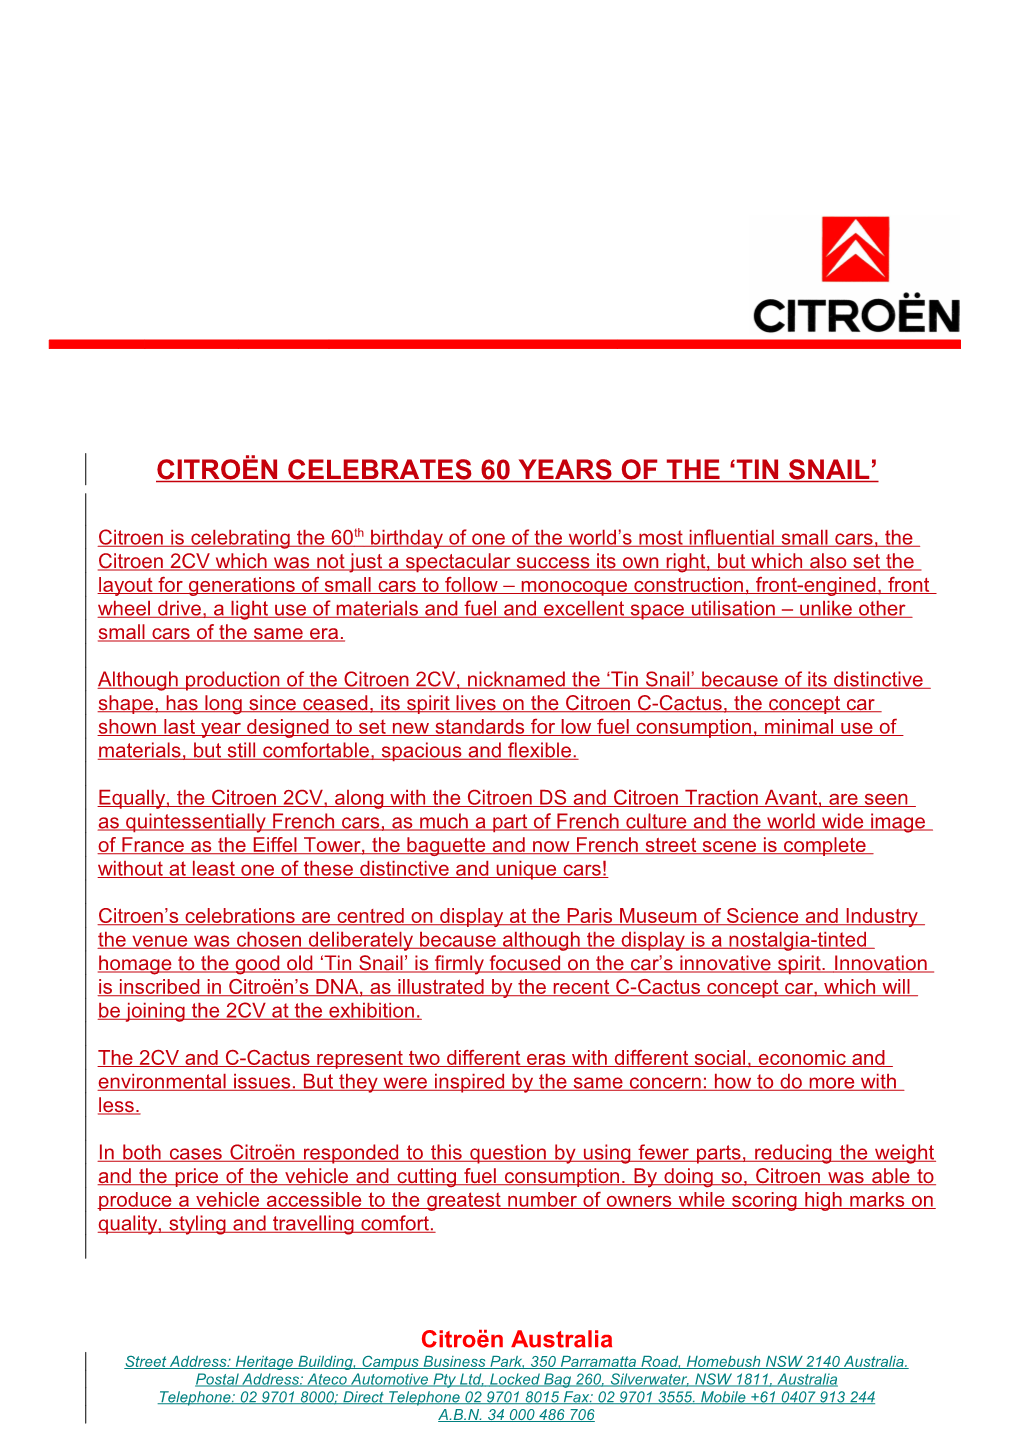 Citroën Celebrates 60 Years of the Tin Snail